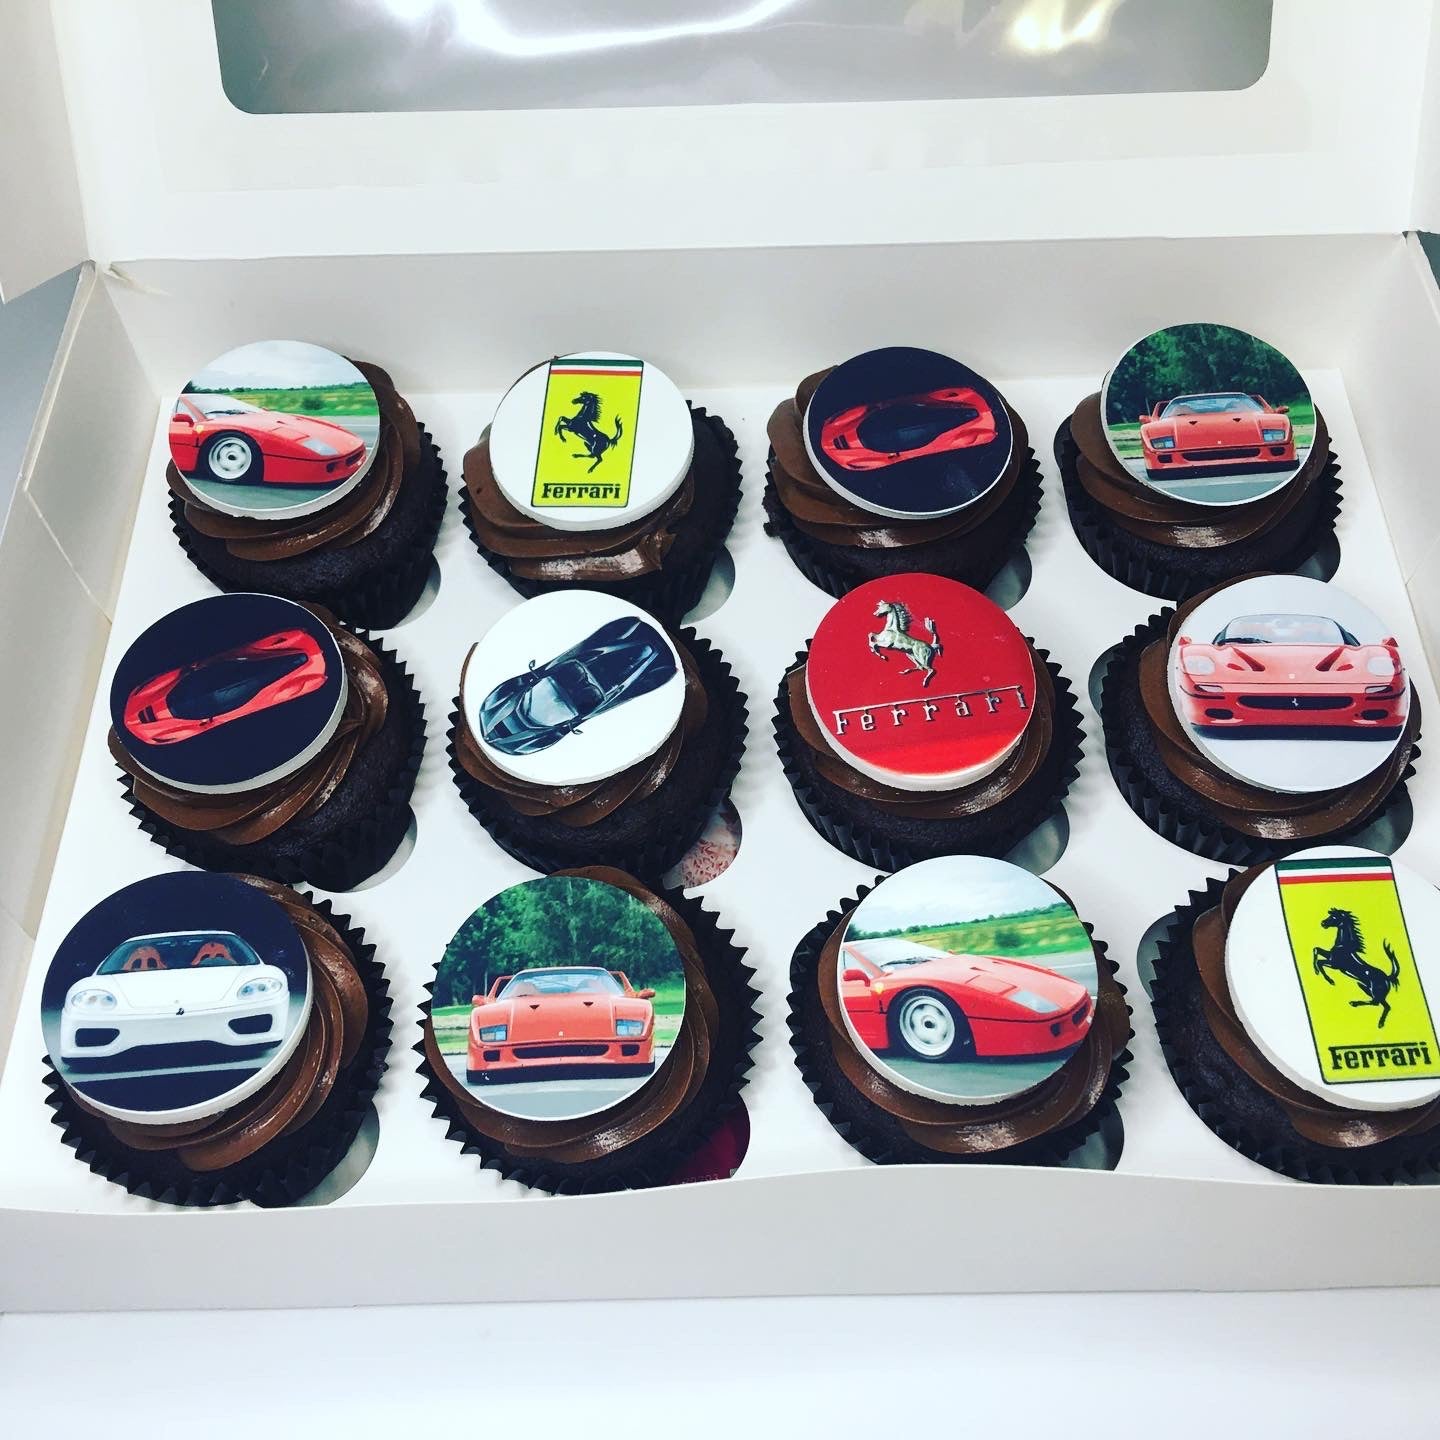 Ferrari car and Ferrari logo cupcakes